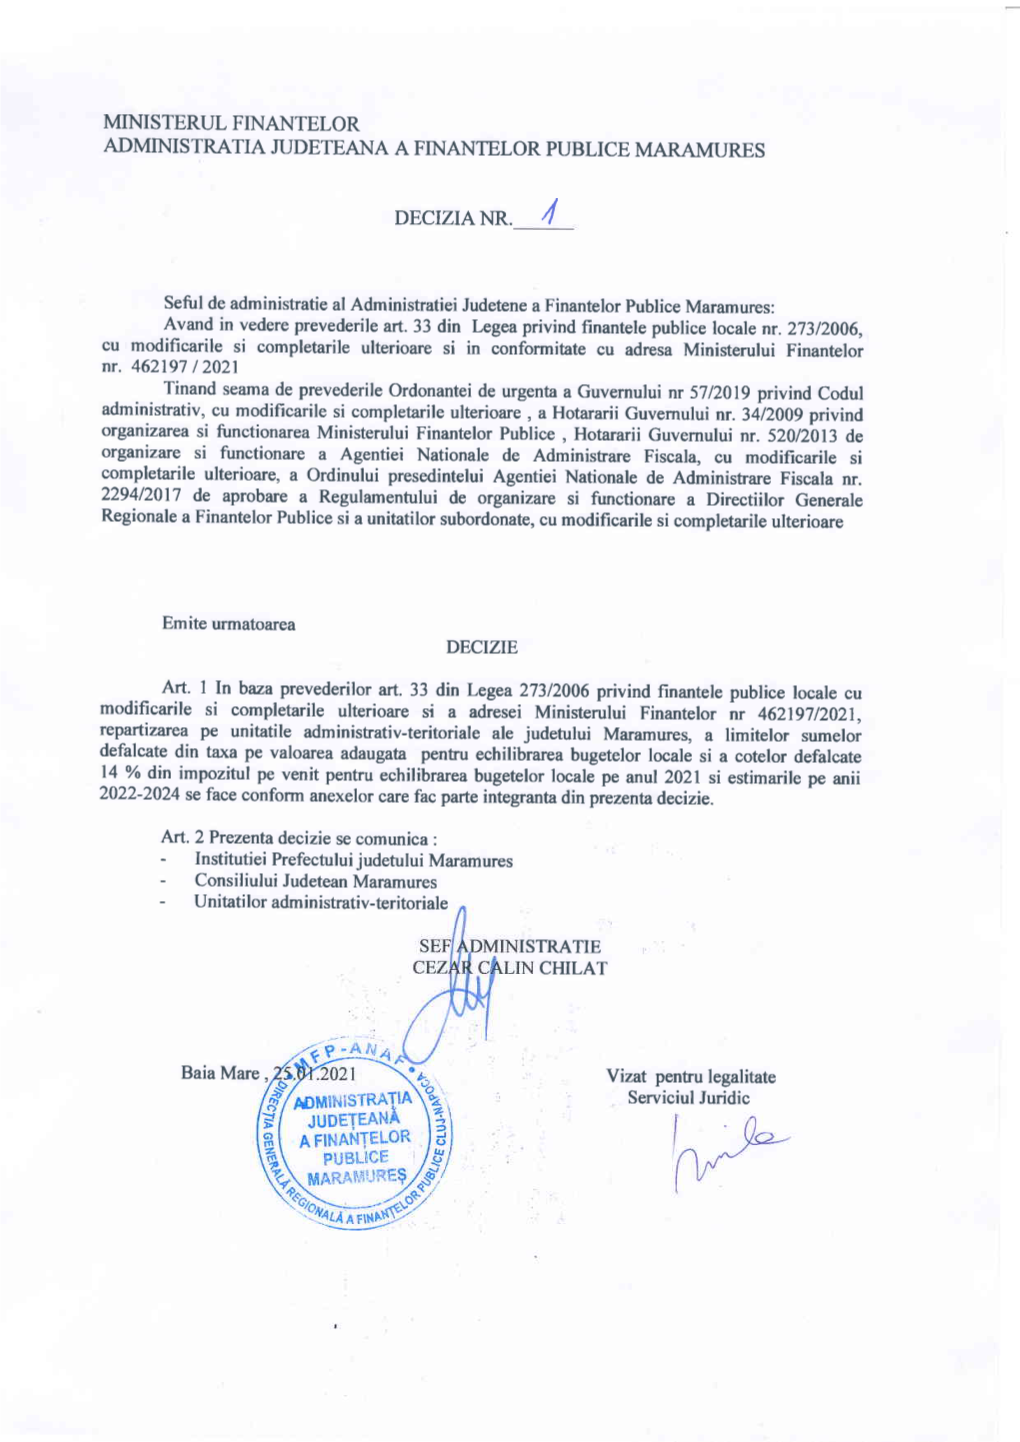 Ministerul Finantelor Administratia Judeteana a Finantelor Publice Maramures Decizia Nr.